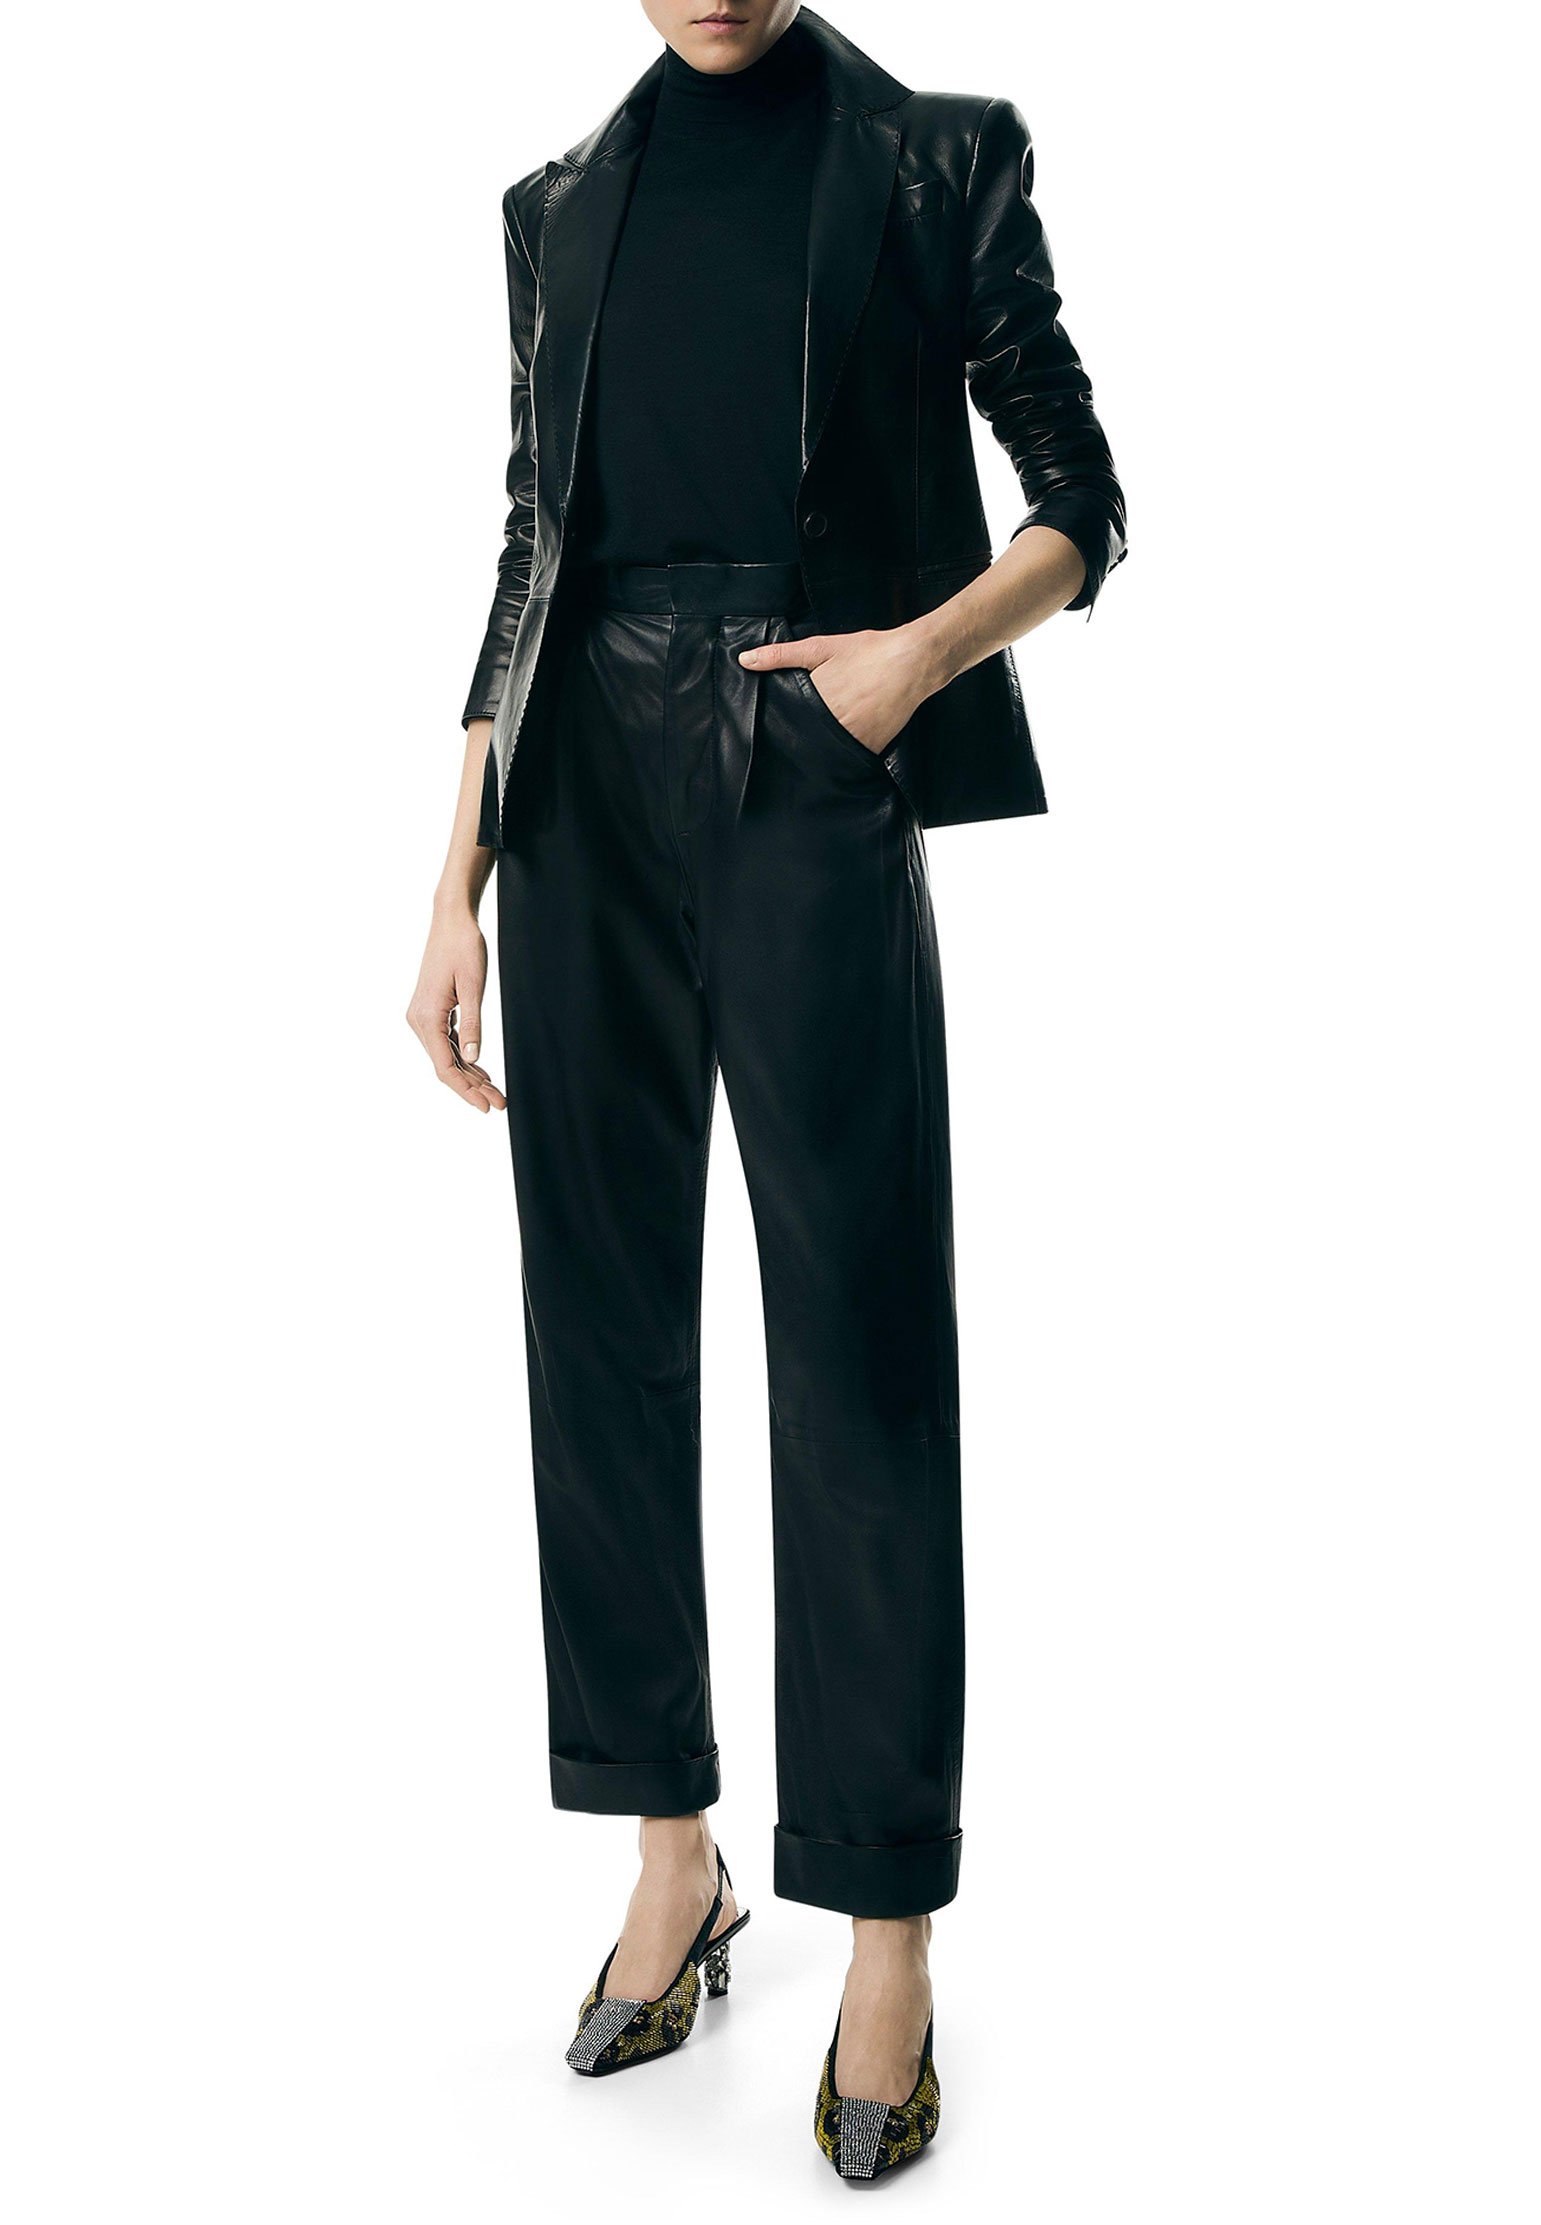 Jacket TOM FORD Color: black (Code: 2958) in online store Allure